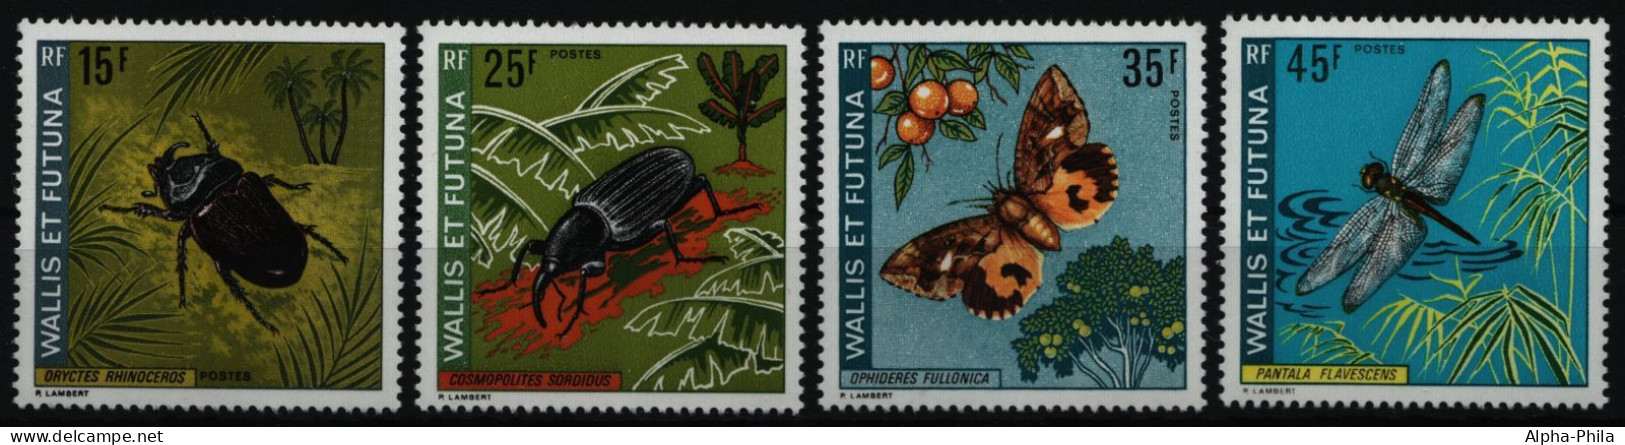 Wallis & Futuna 1974 - Mi-Nr. 254-257 ** - MNH - Insekten / Insects - Ungebraucht